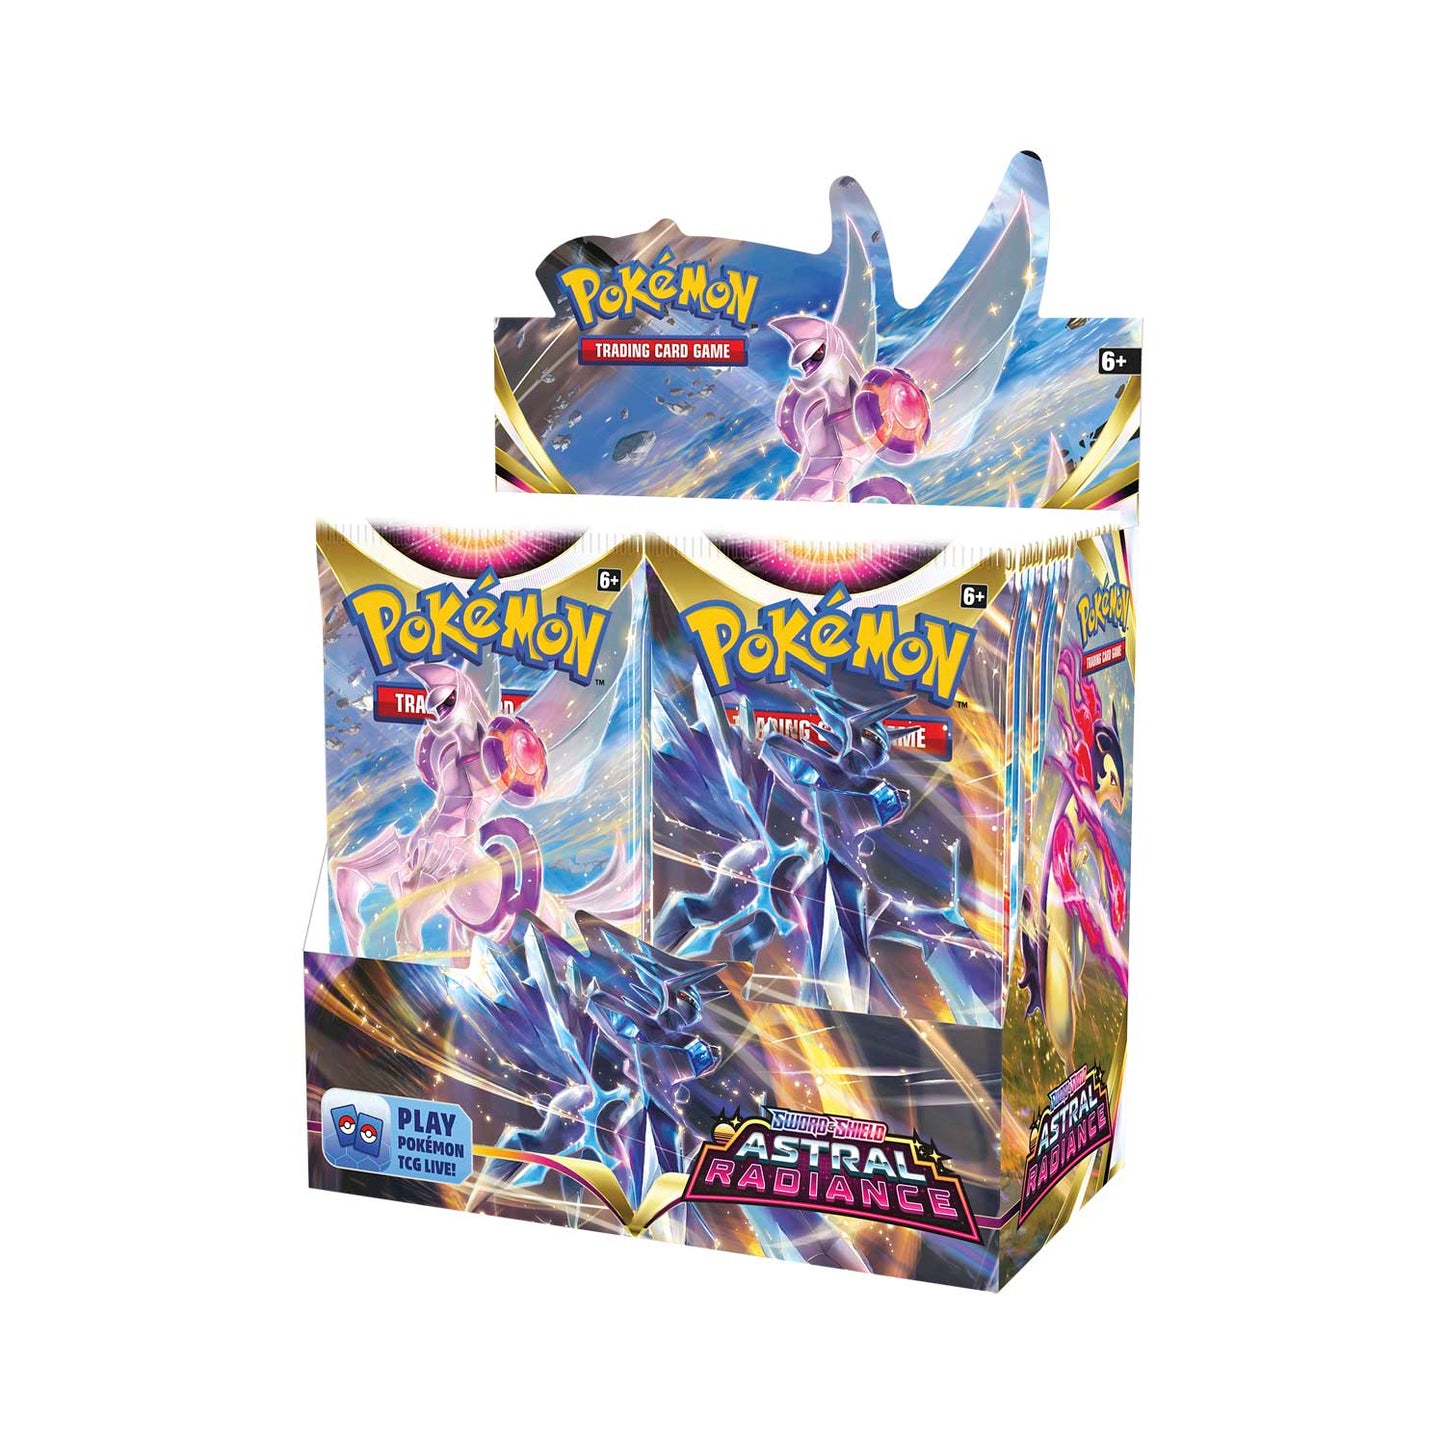 Pokémon TCG: Sword & Shield - Astral Radiance Booster Display Box (36 Packs)